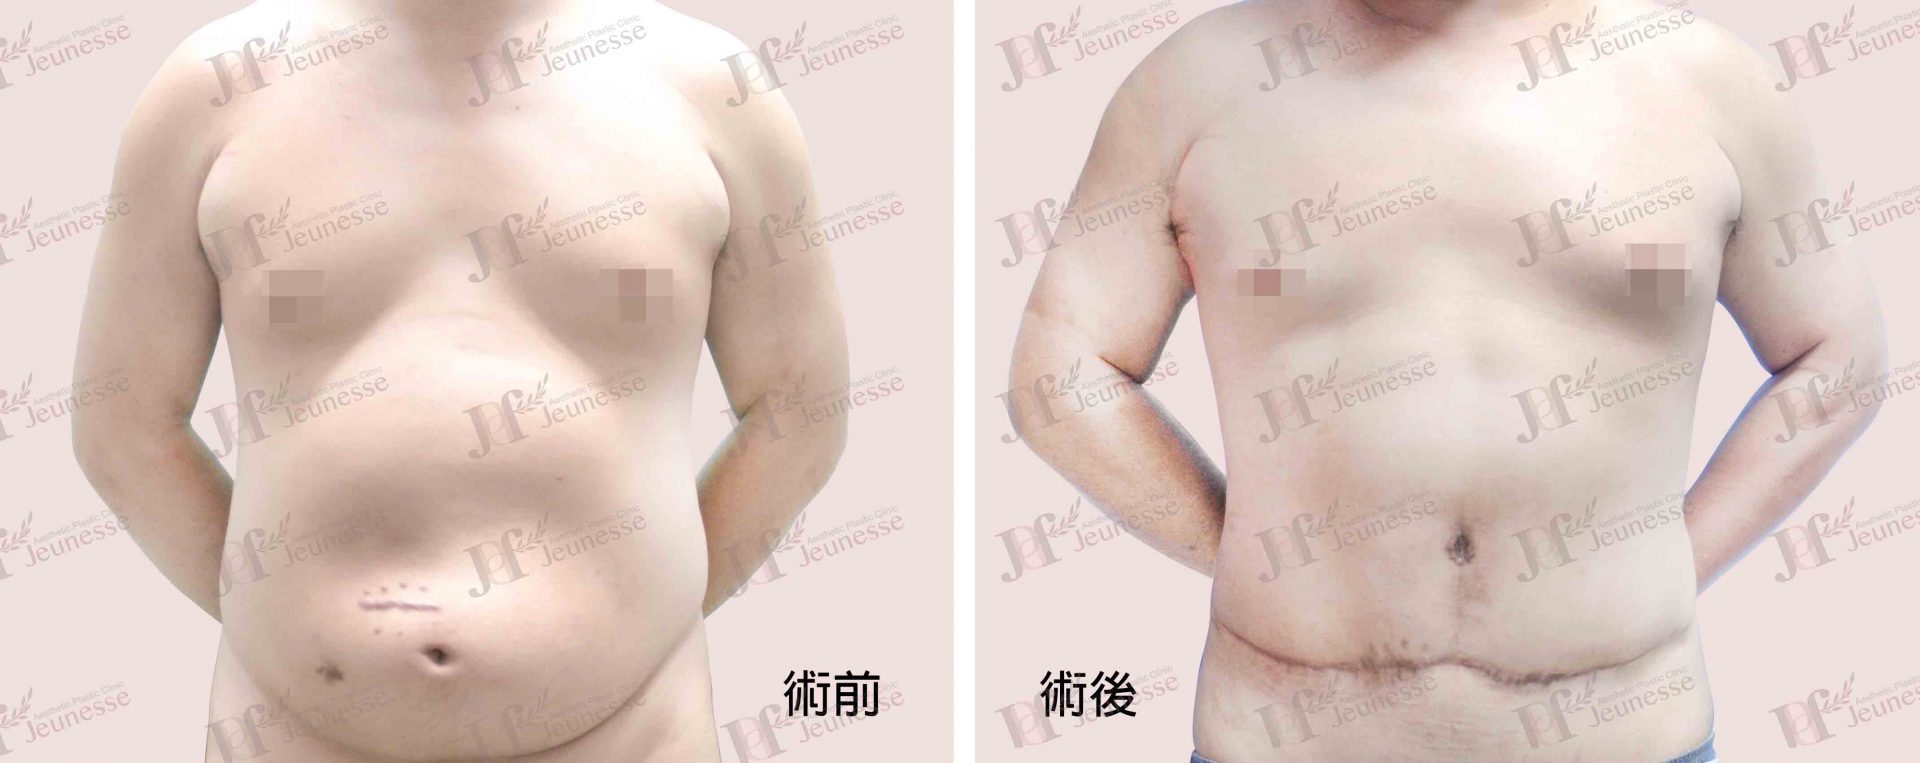 Abdominoplasty腹部成形術及抽脂手術 case 2 正面-浮水印